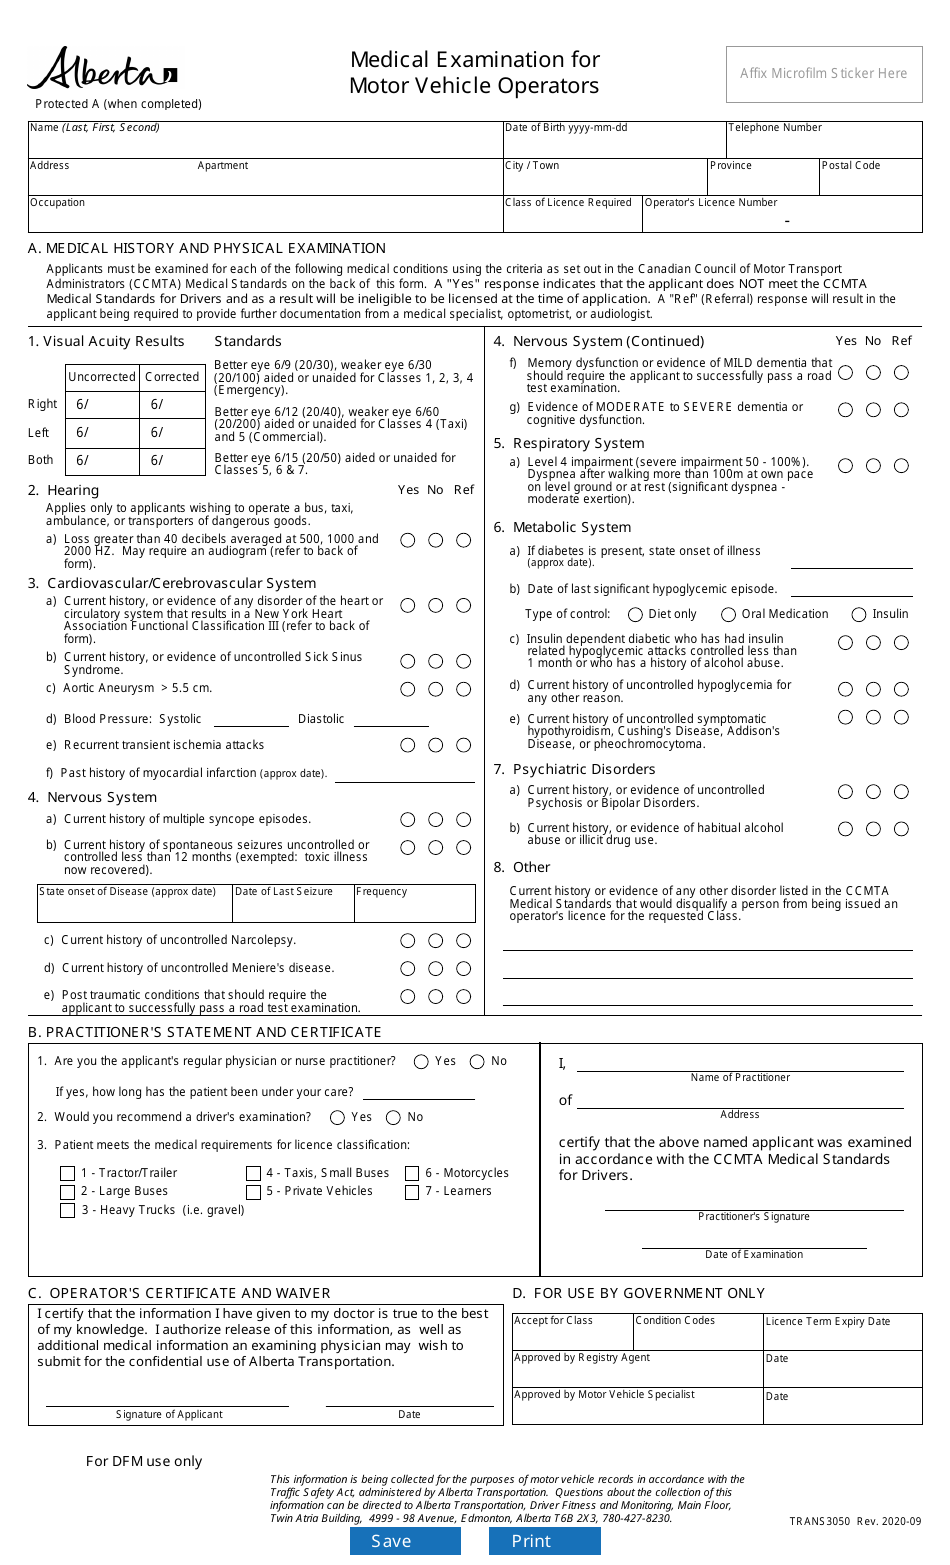 Form TRANS3050 Medical Examination for Motor Vehicle Operators - Alberta, Canada, Page 1